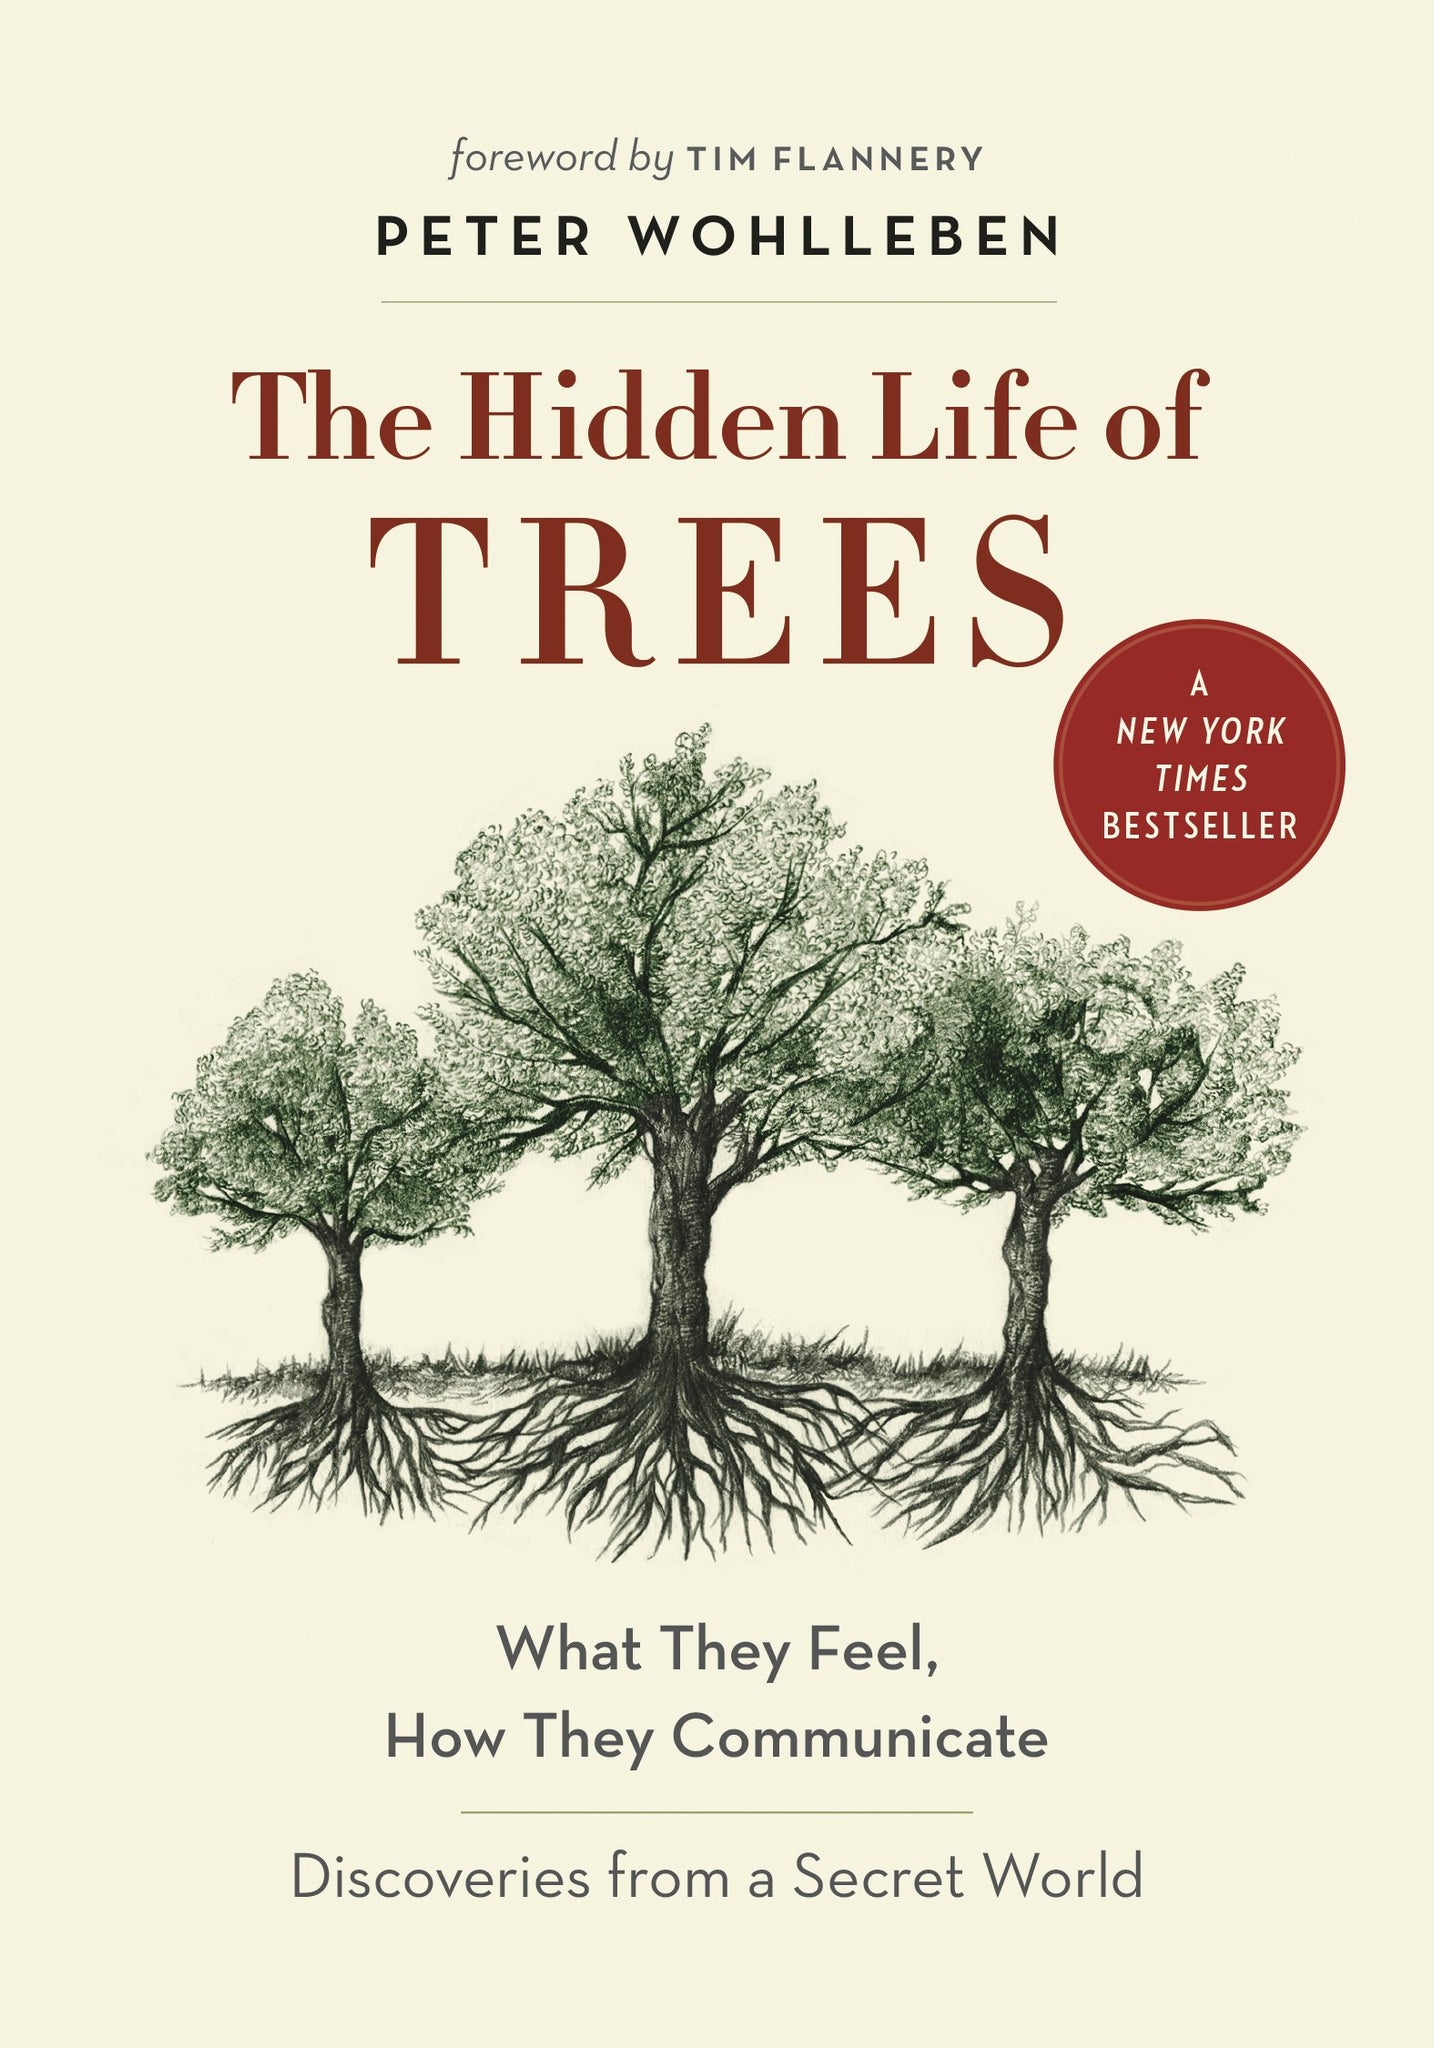 The Hidden Life of Trees by Peter Wohlleben - hardcvr